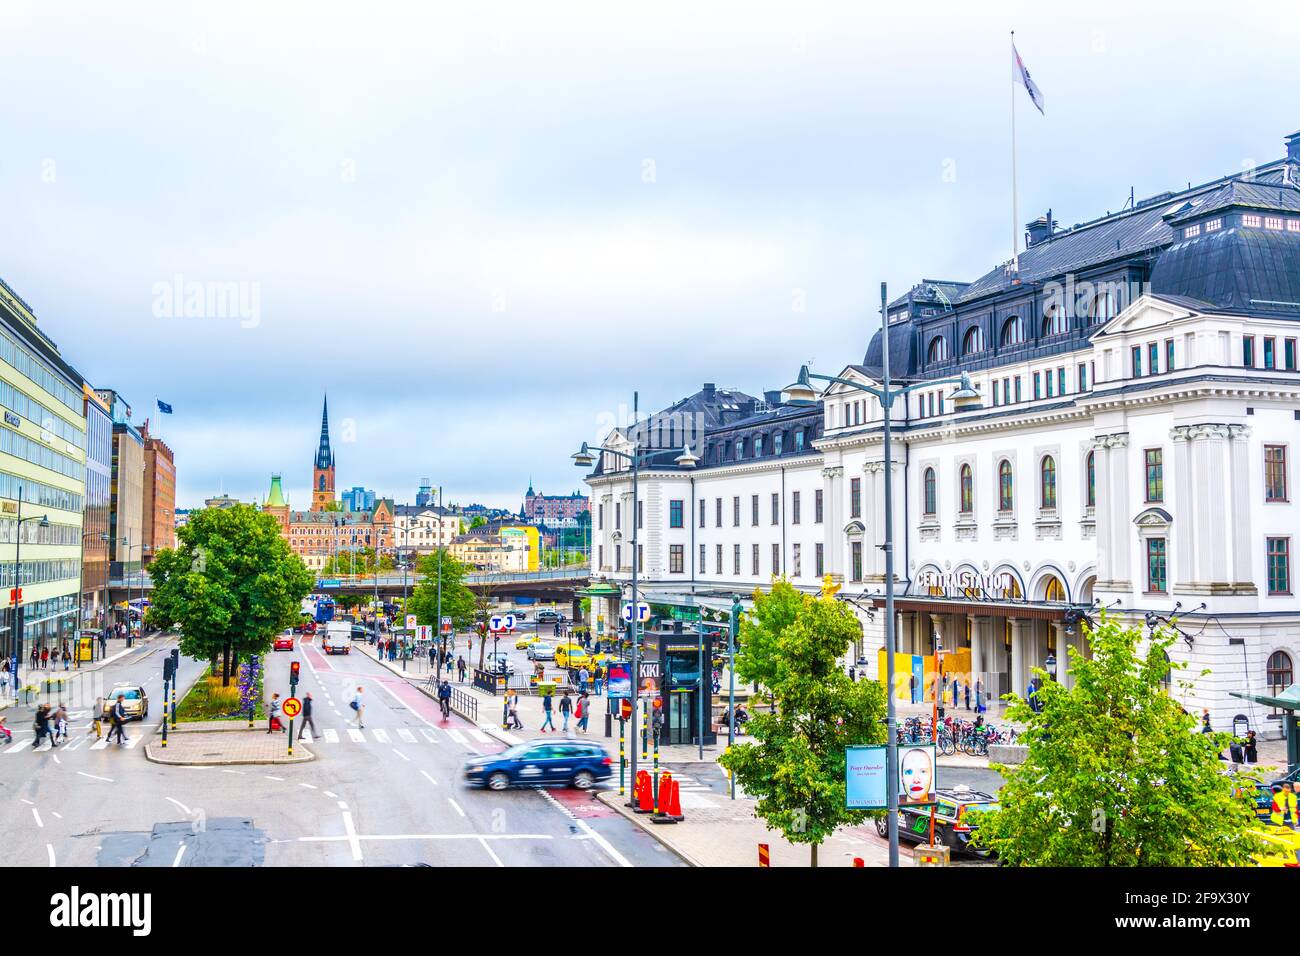 STOCKHOLM, SCHWEDEN, 18. AUGUST 2016: Blick auf den Hauptbahnhof in der schwedischen Hauptstadt Stockholm. Stockfoto